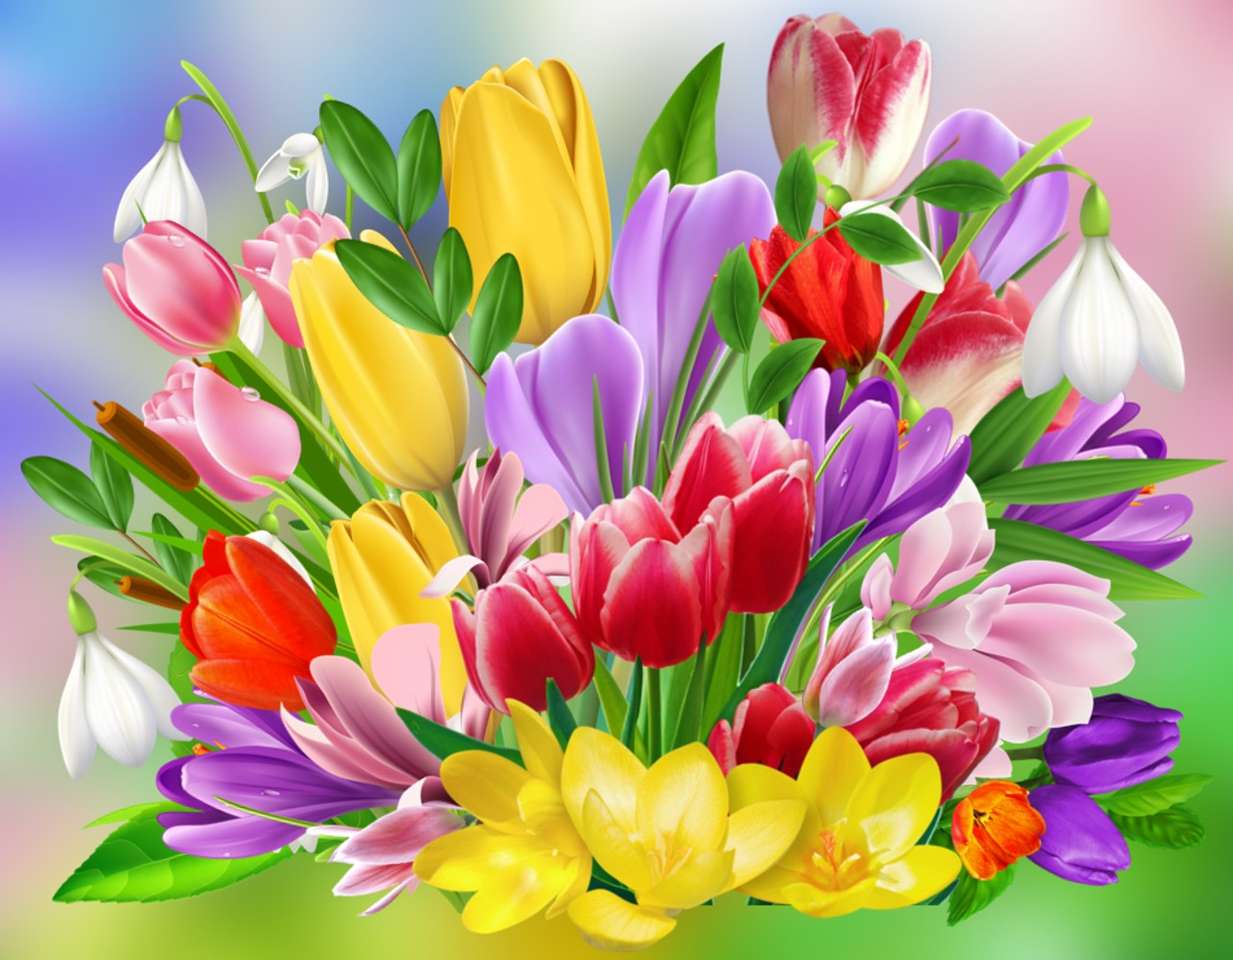 Flowers in pastel colors online puzzle